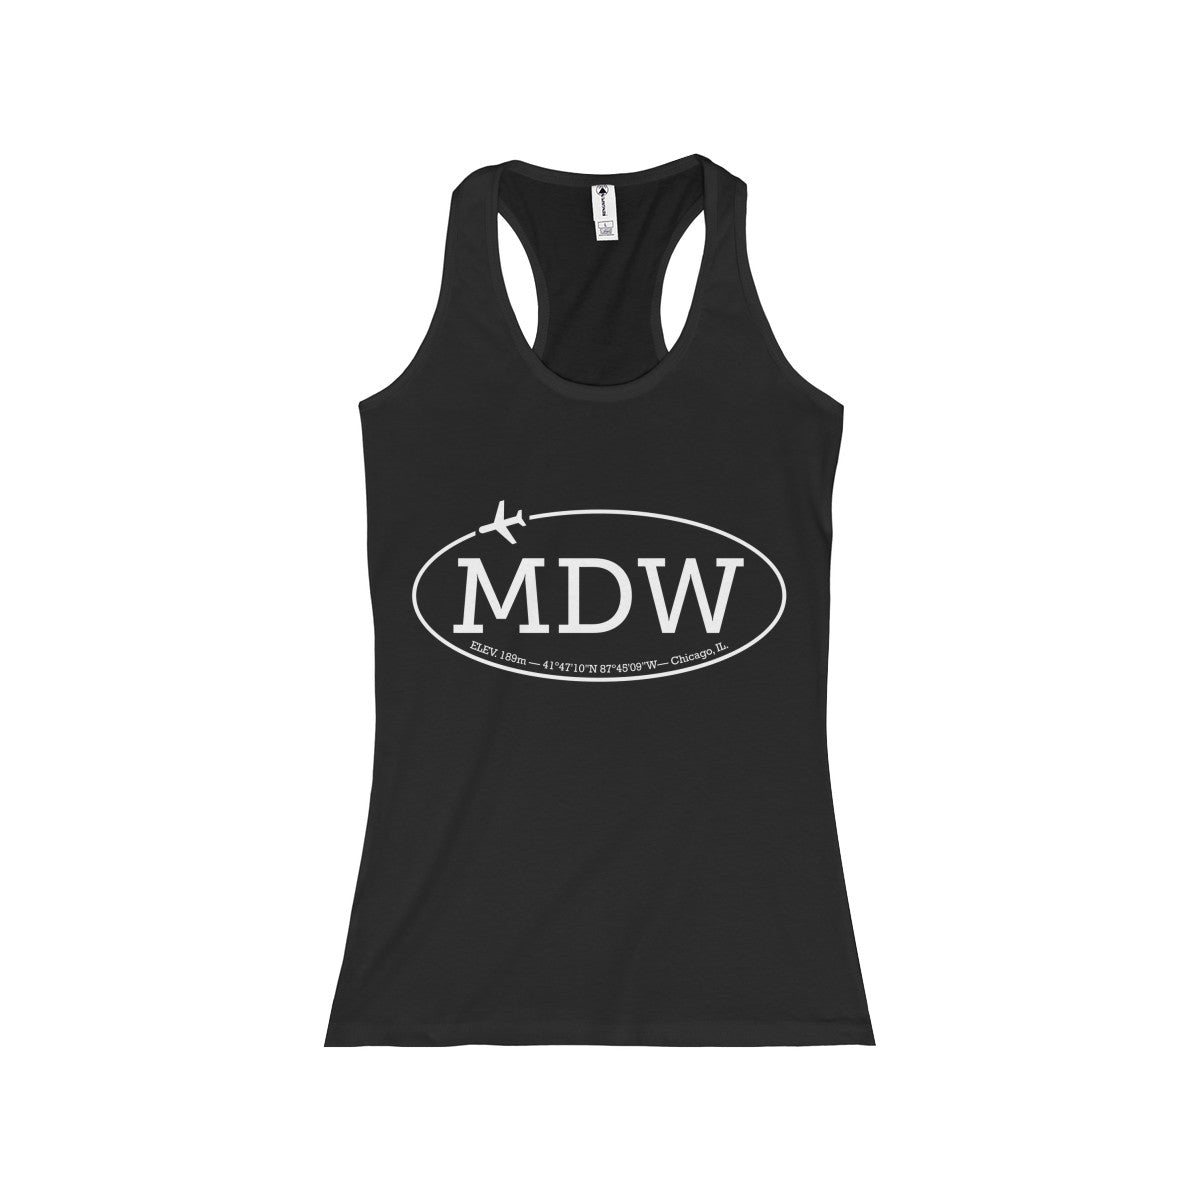 MDW Local - Women's Racerback Tank